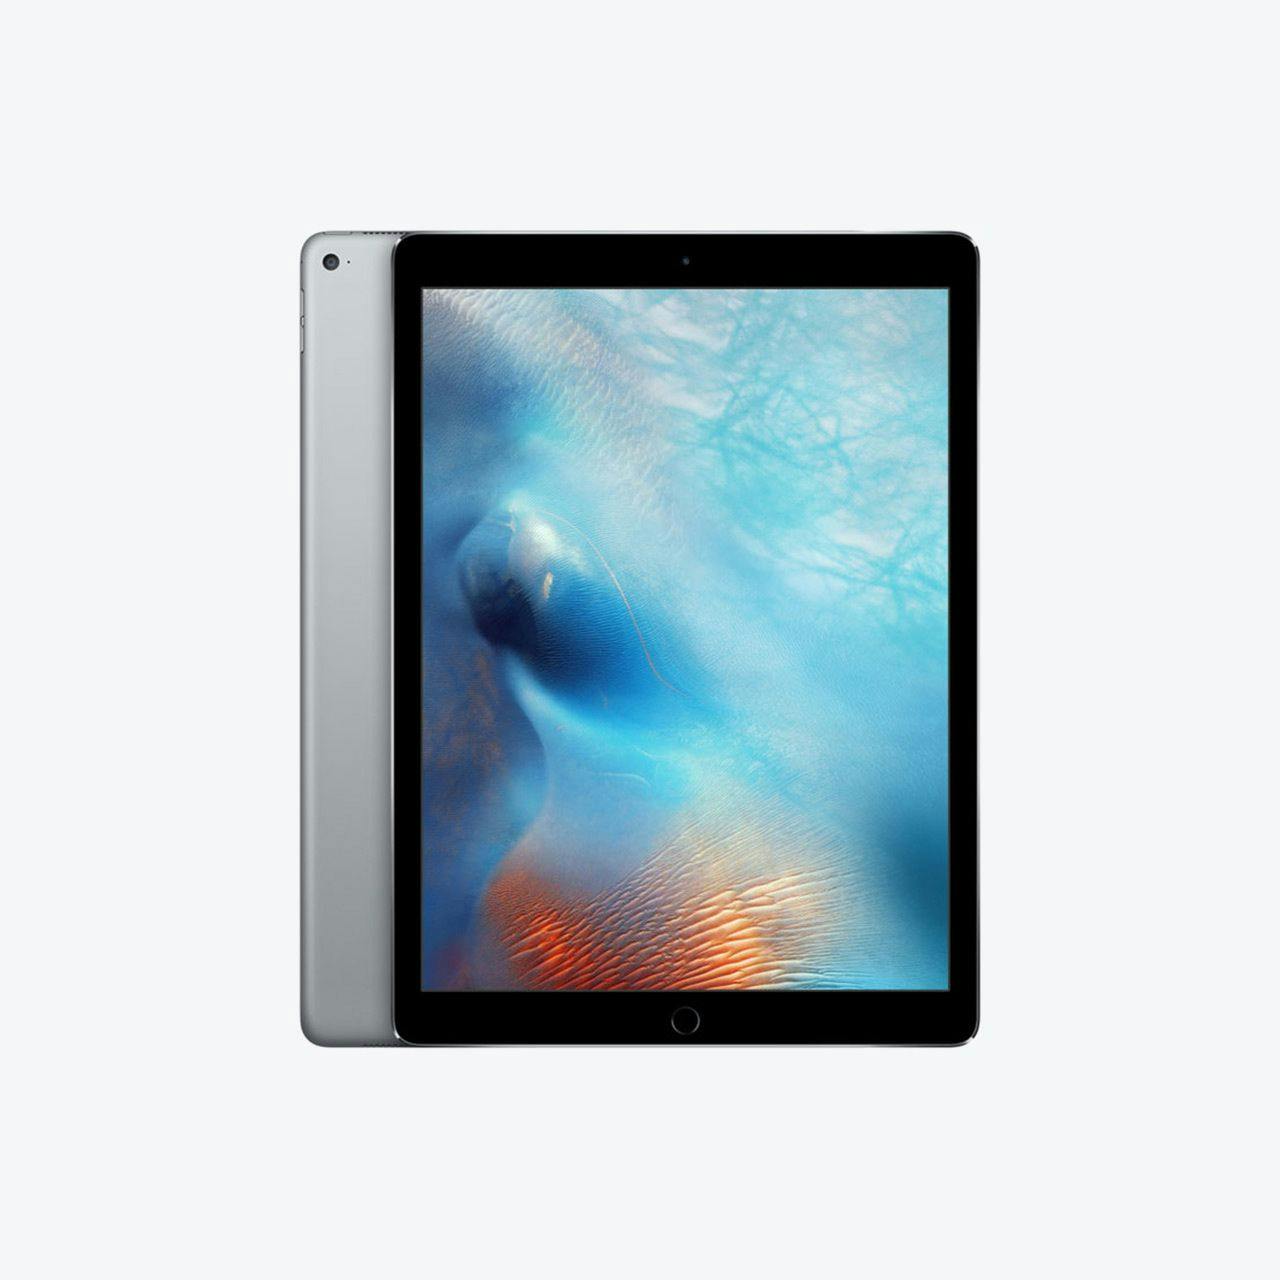 Image of iPad Pro 12.9-inch (1st Generation).